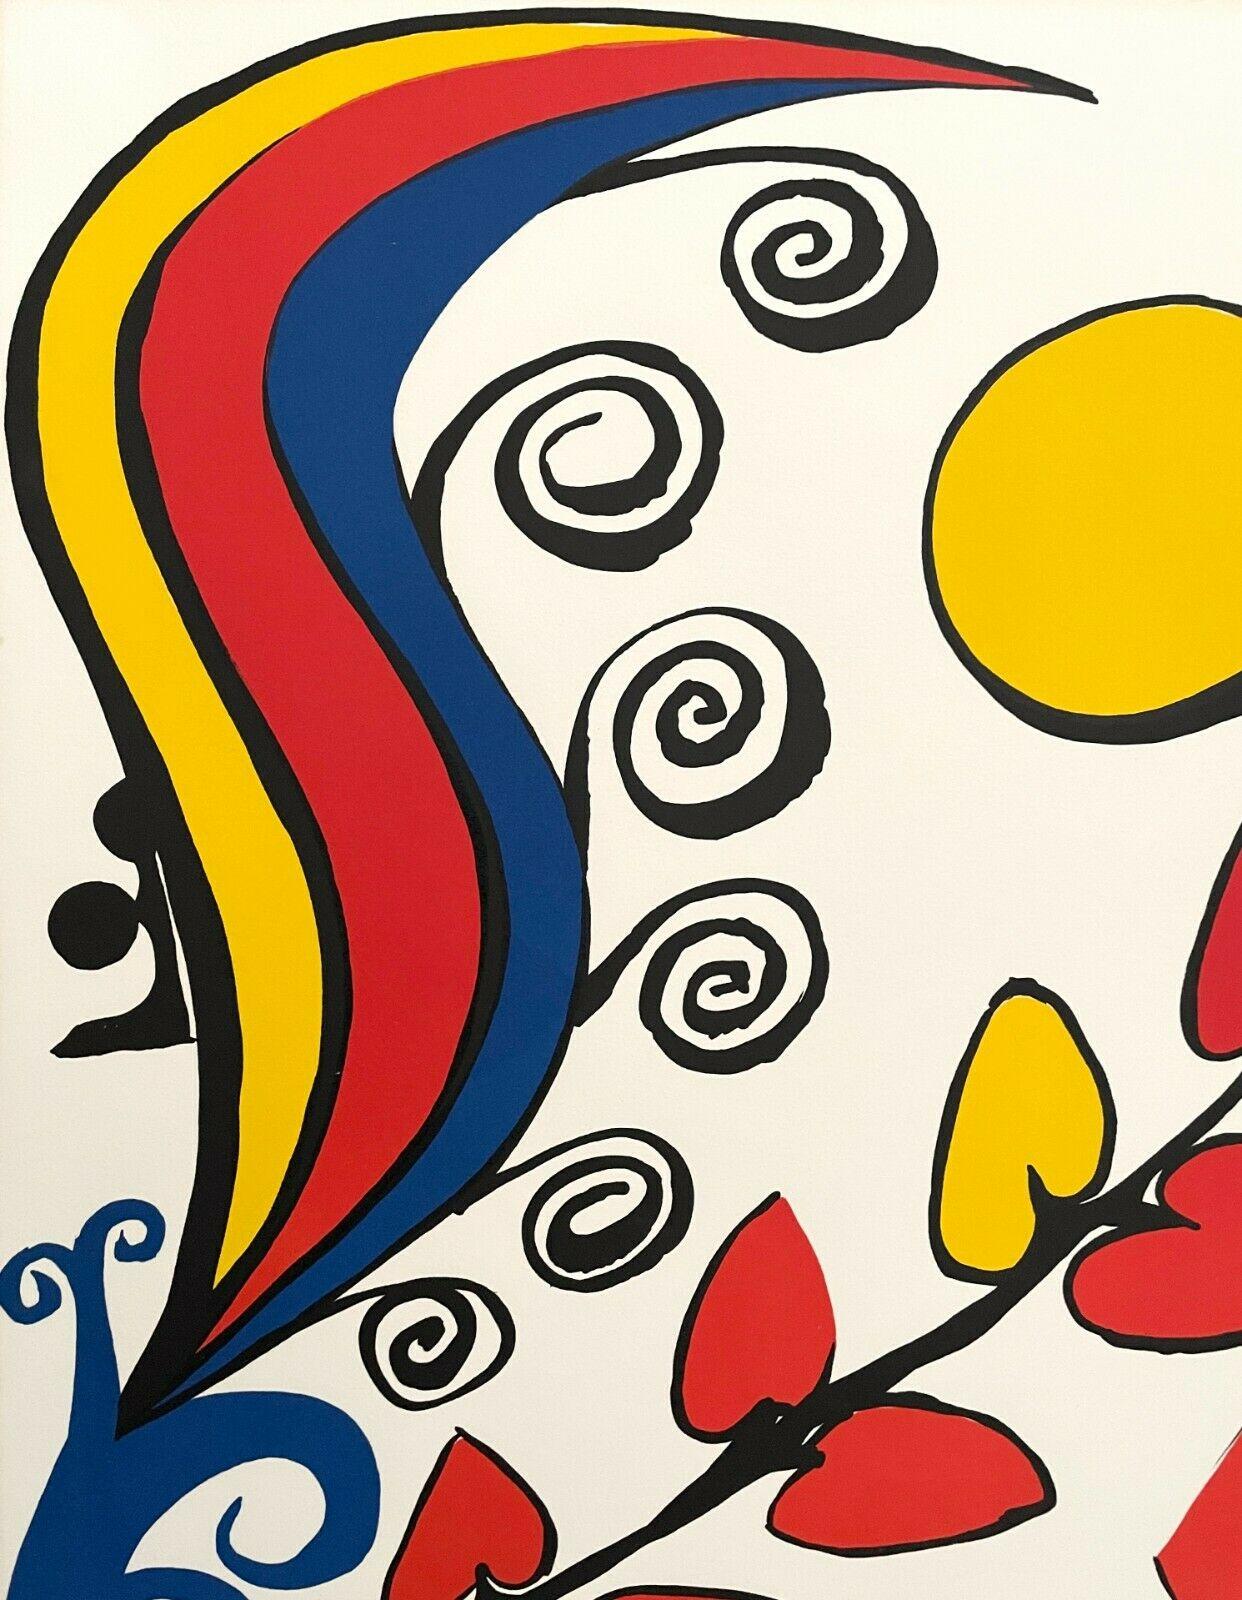 La Fleur (The Flower) - Print by Alexander Calder